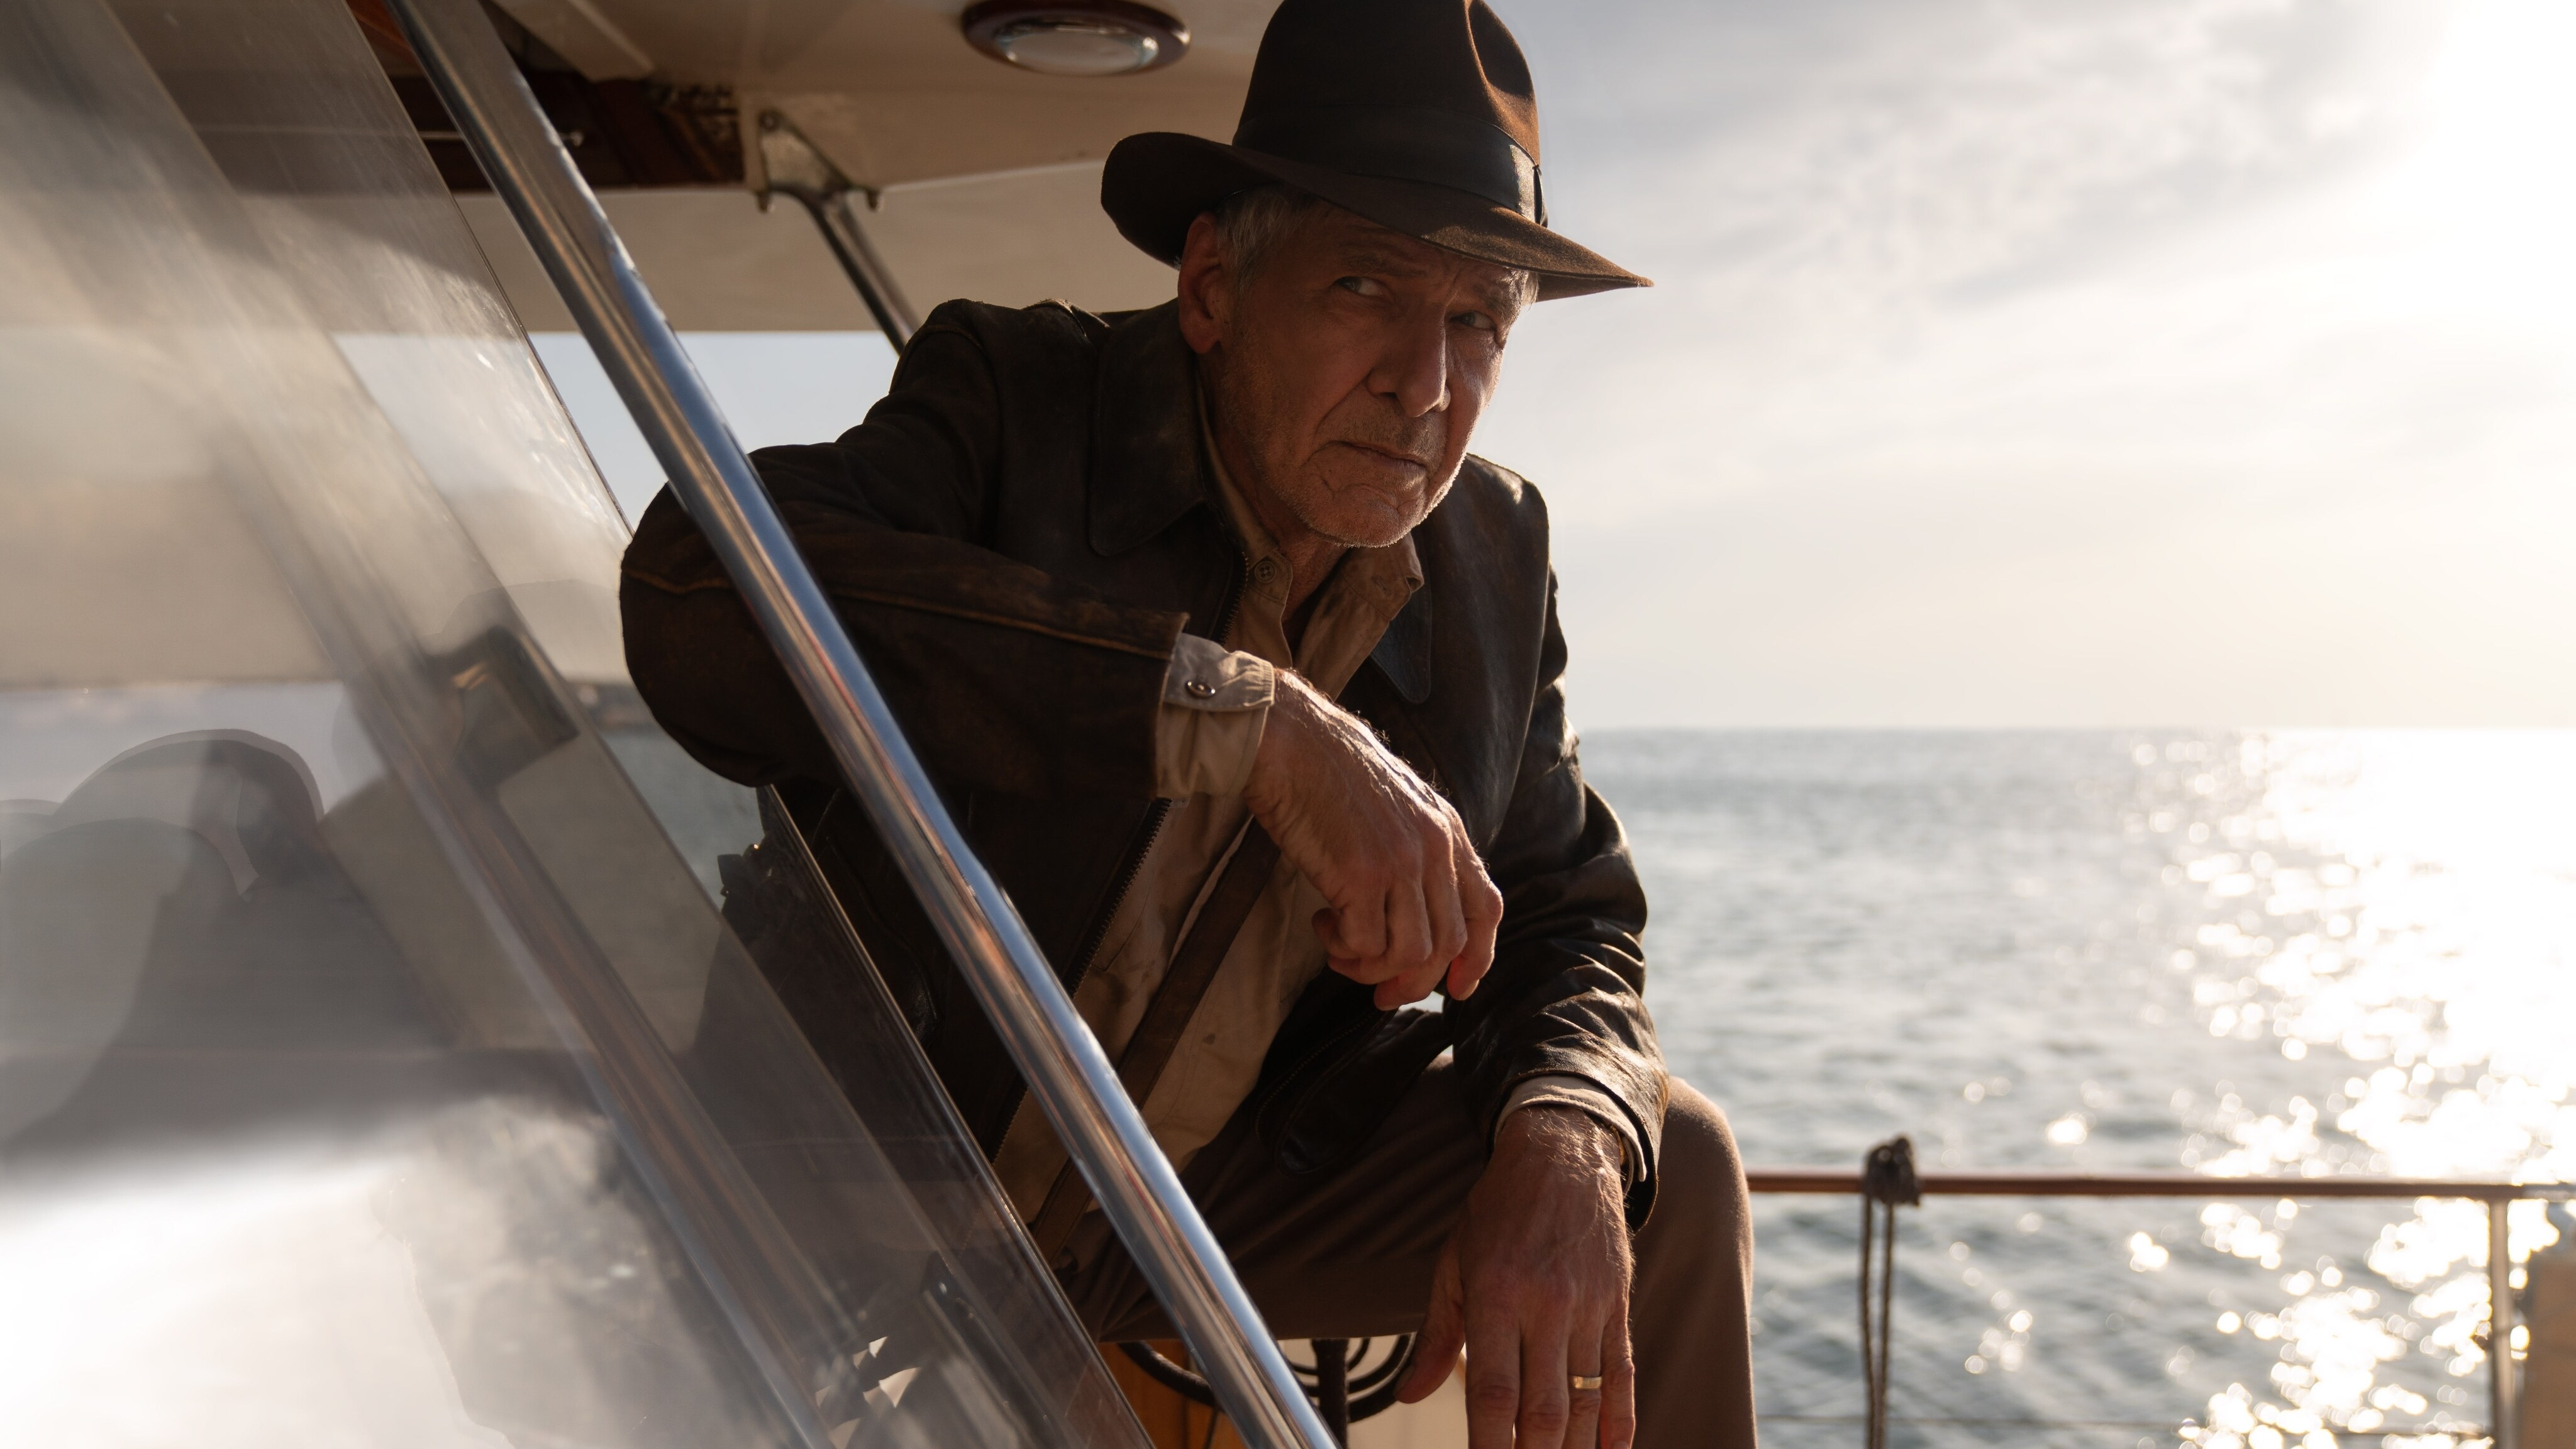 Indiana Jones on boat.